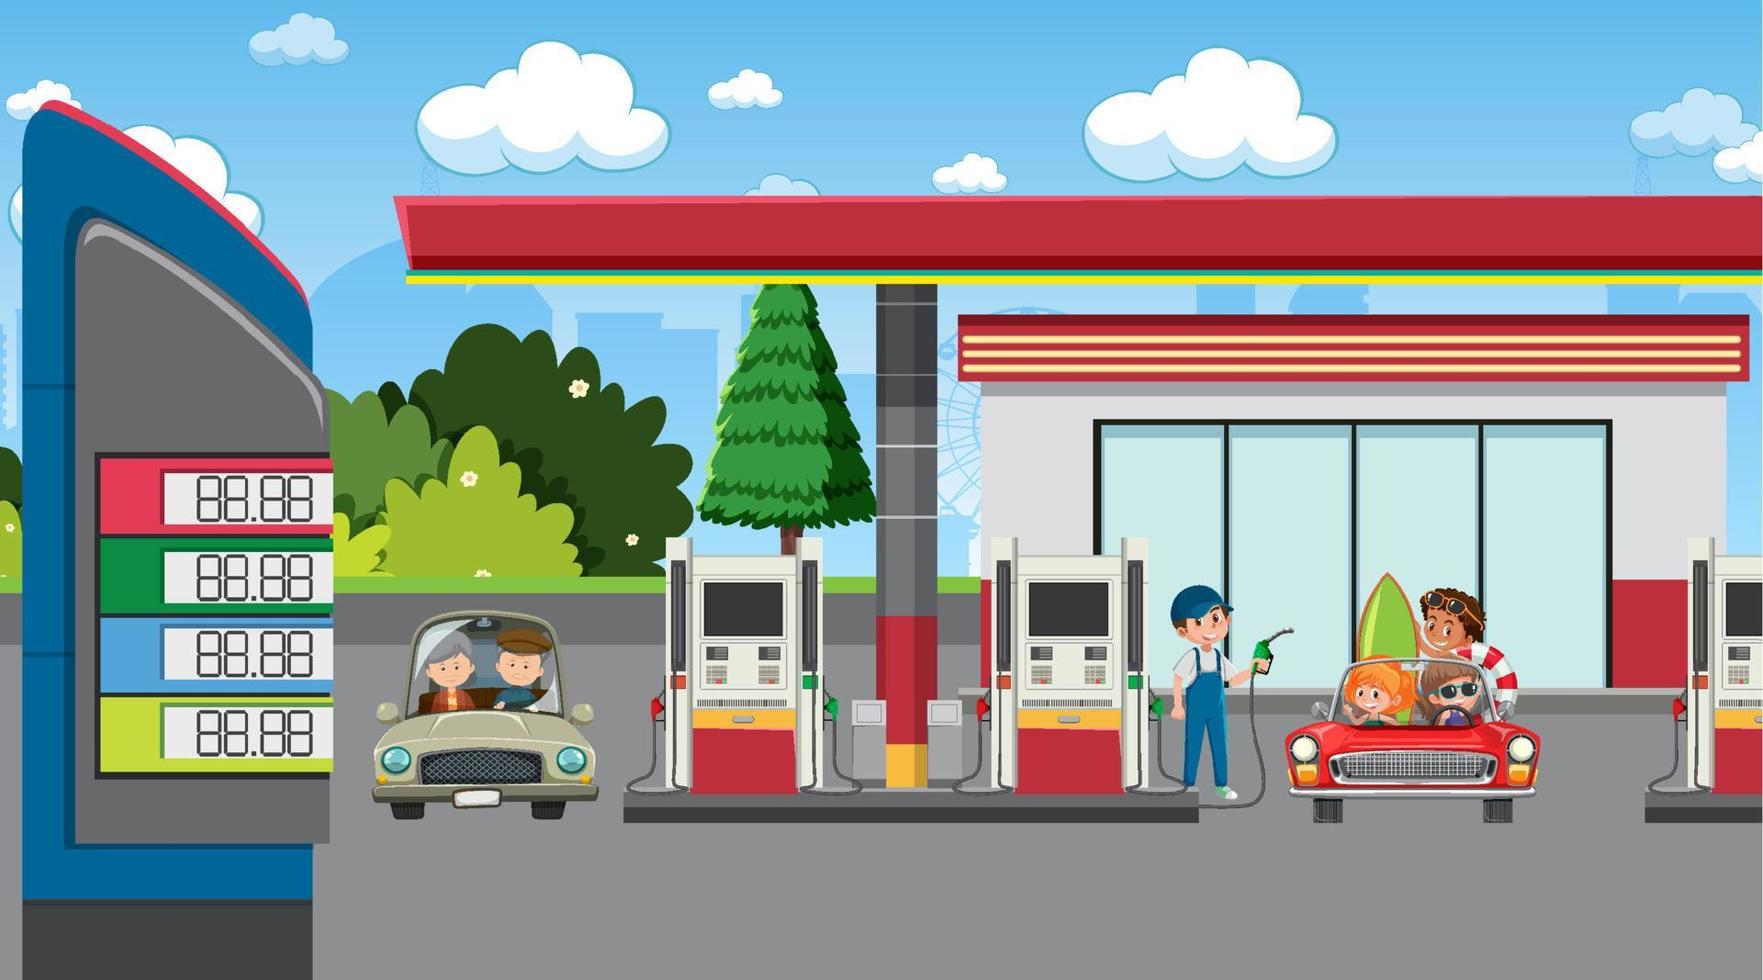 Gas station cartoon scene vector